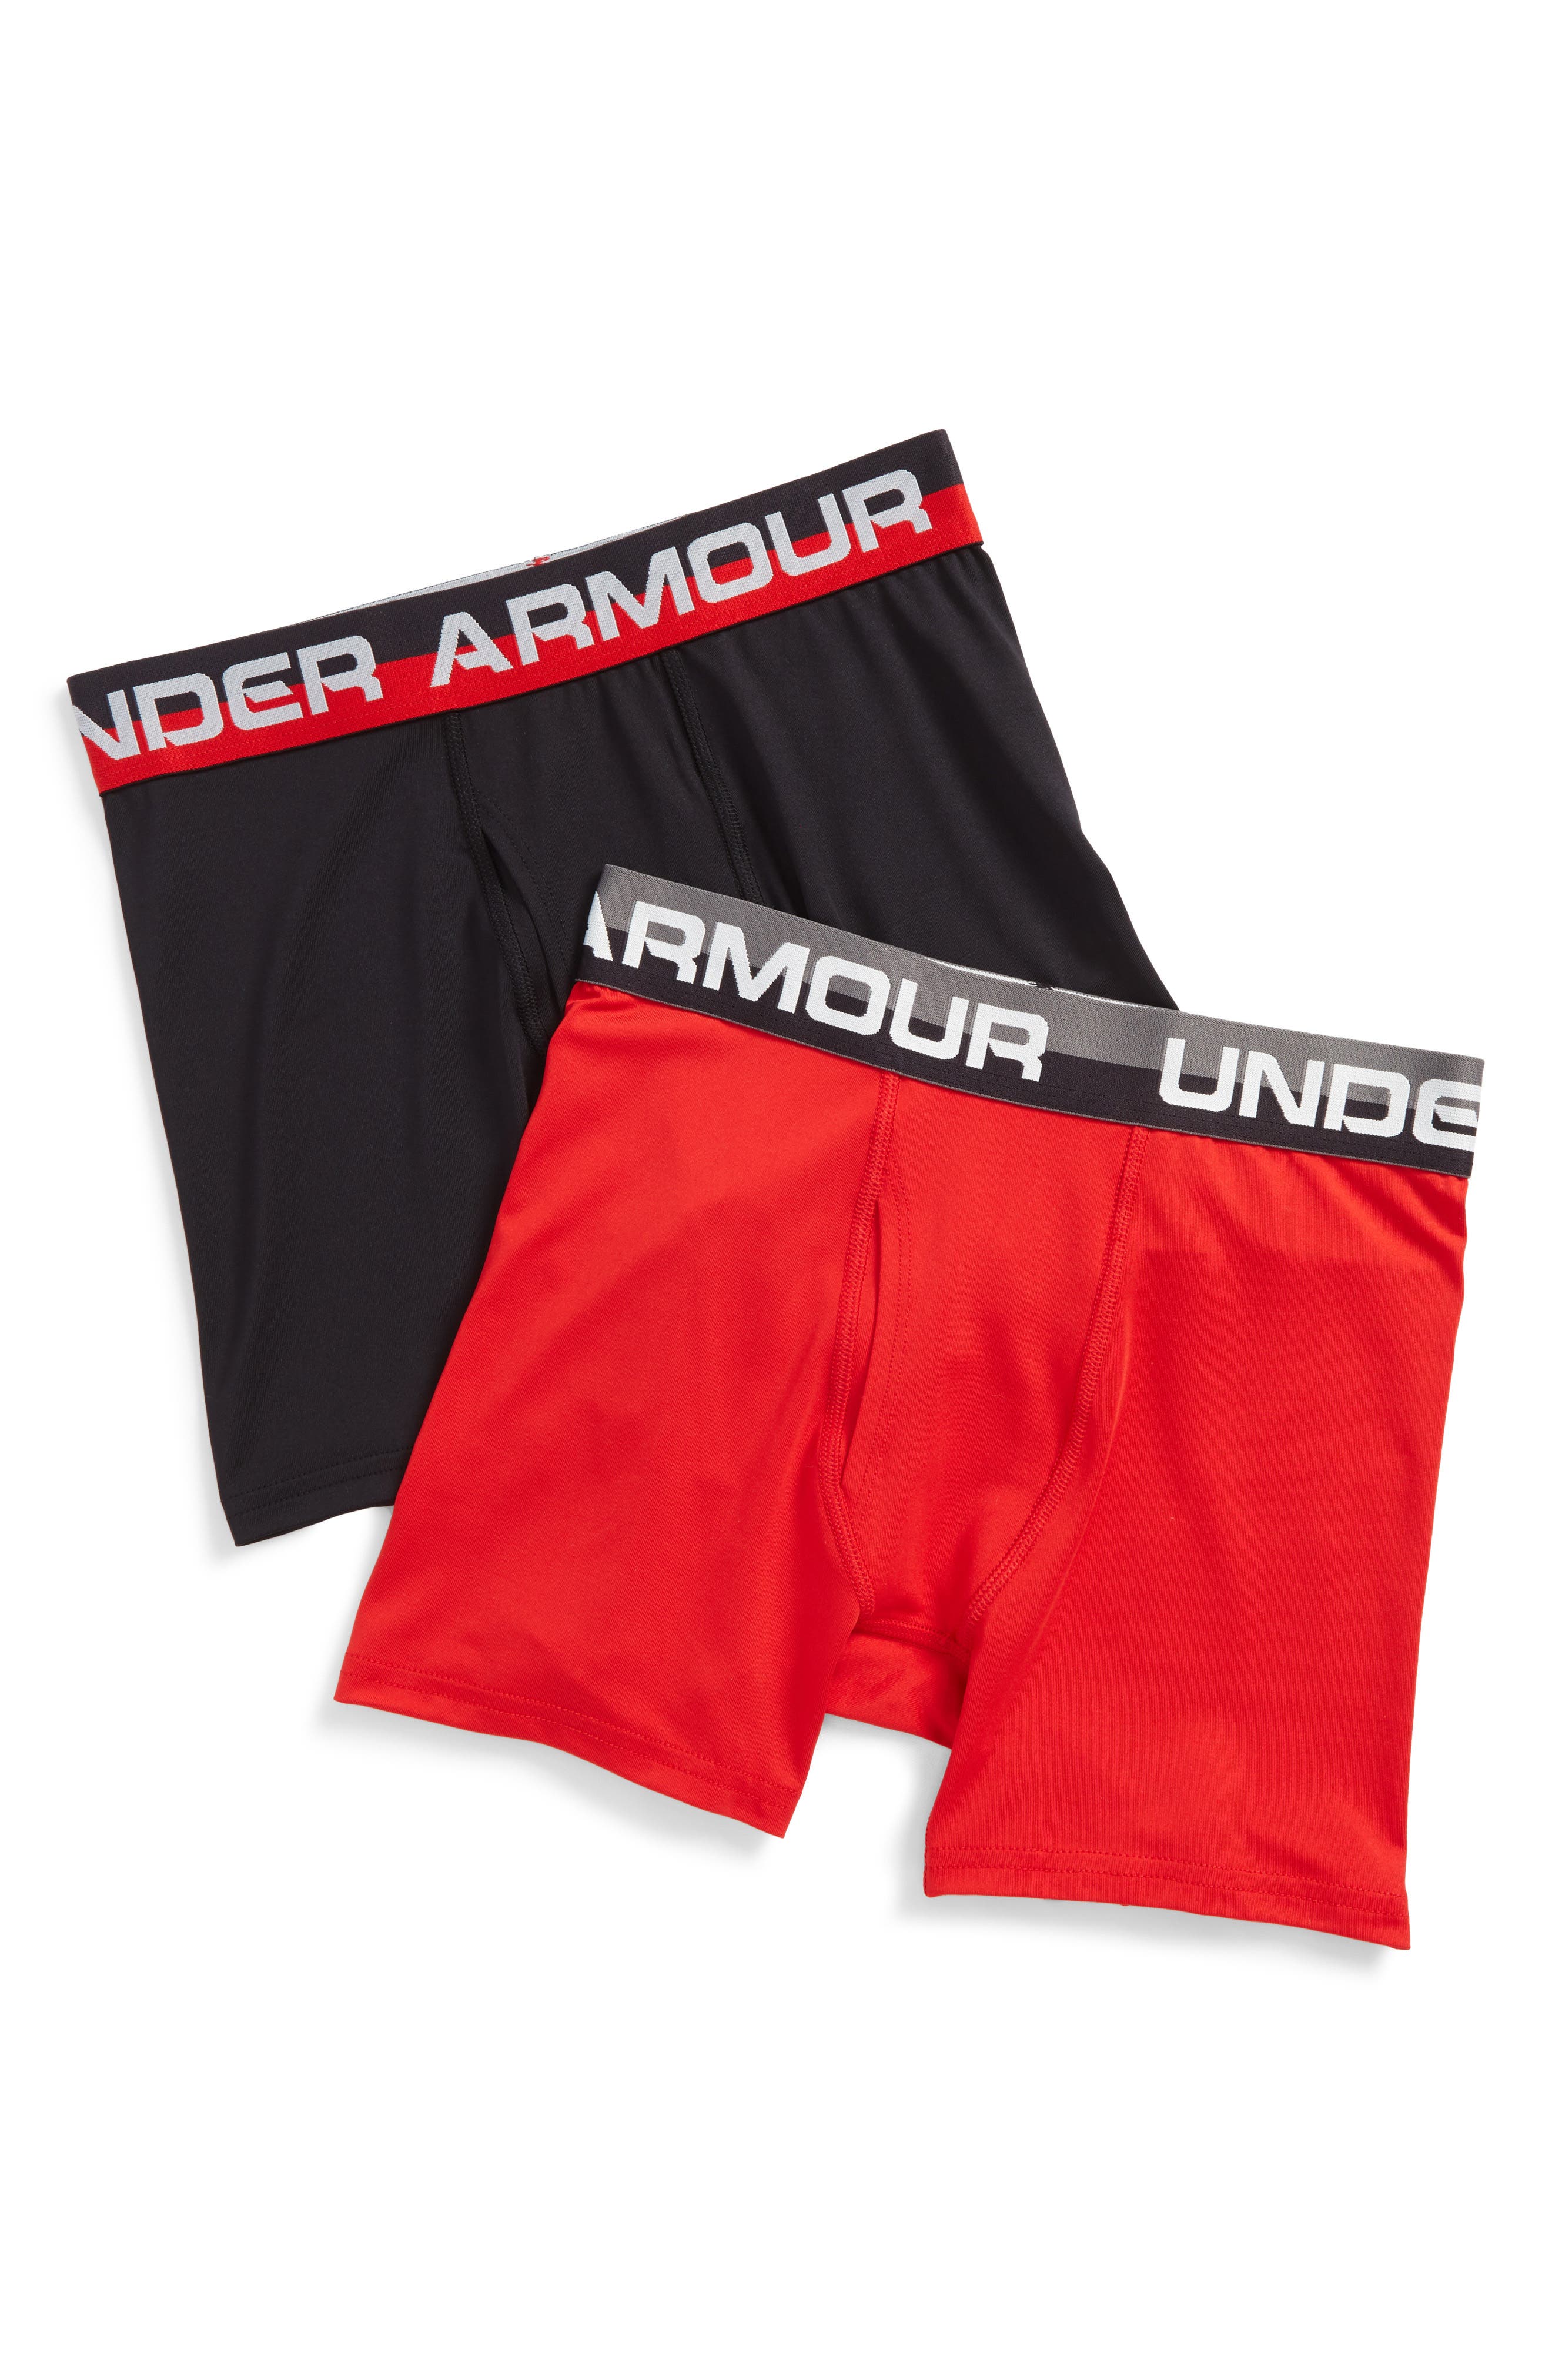 body armour underwear